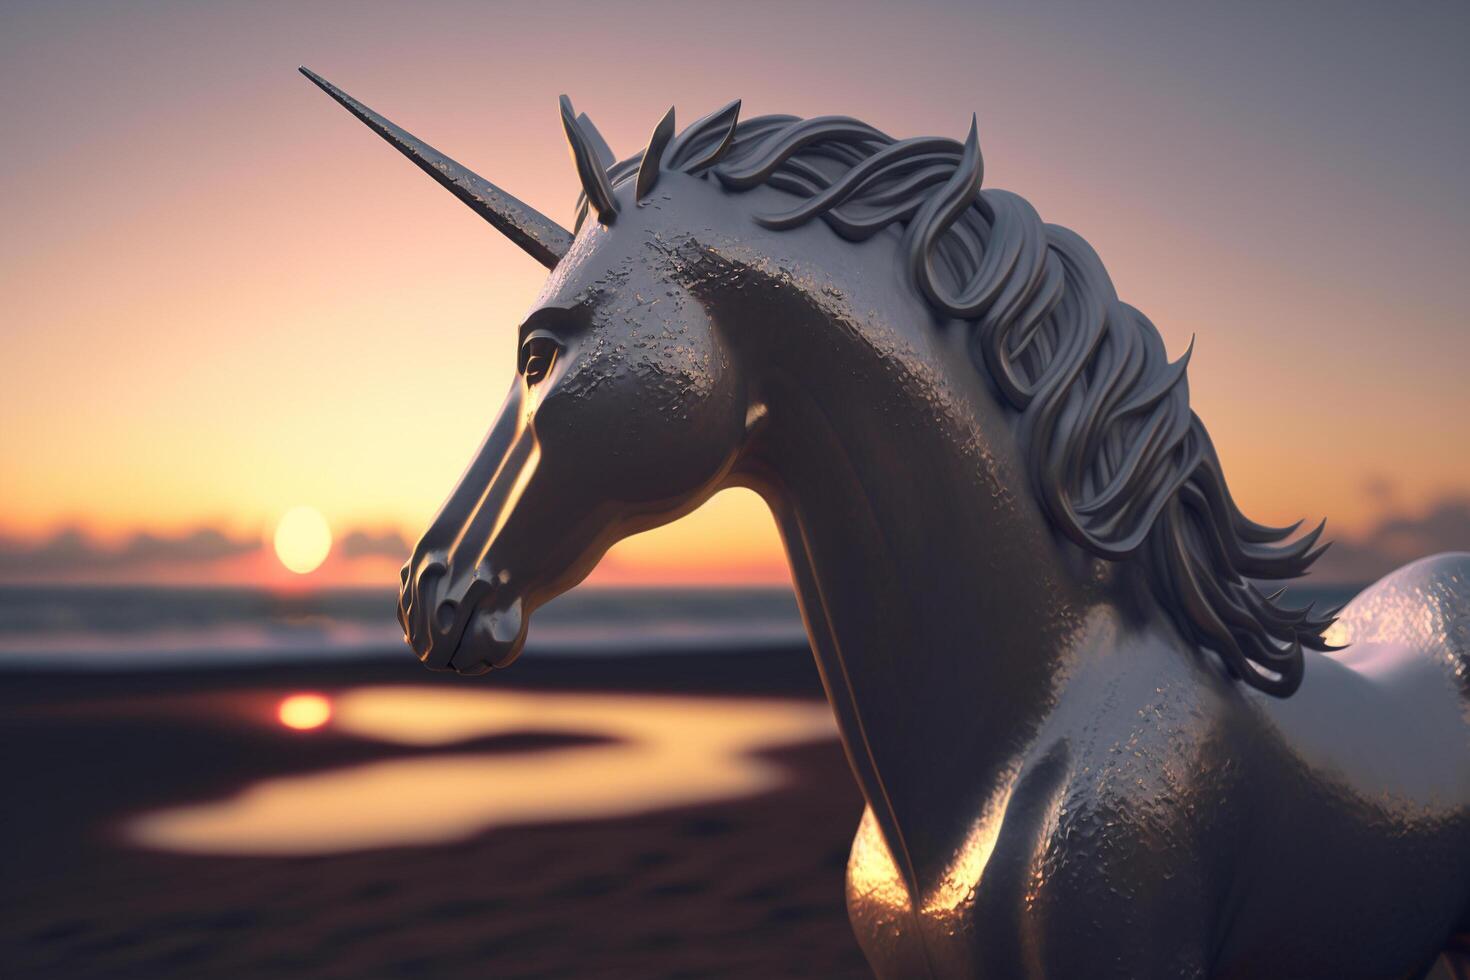 A close up of a unicorn statue on a beach, photo